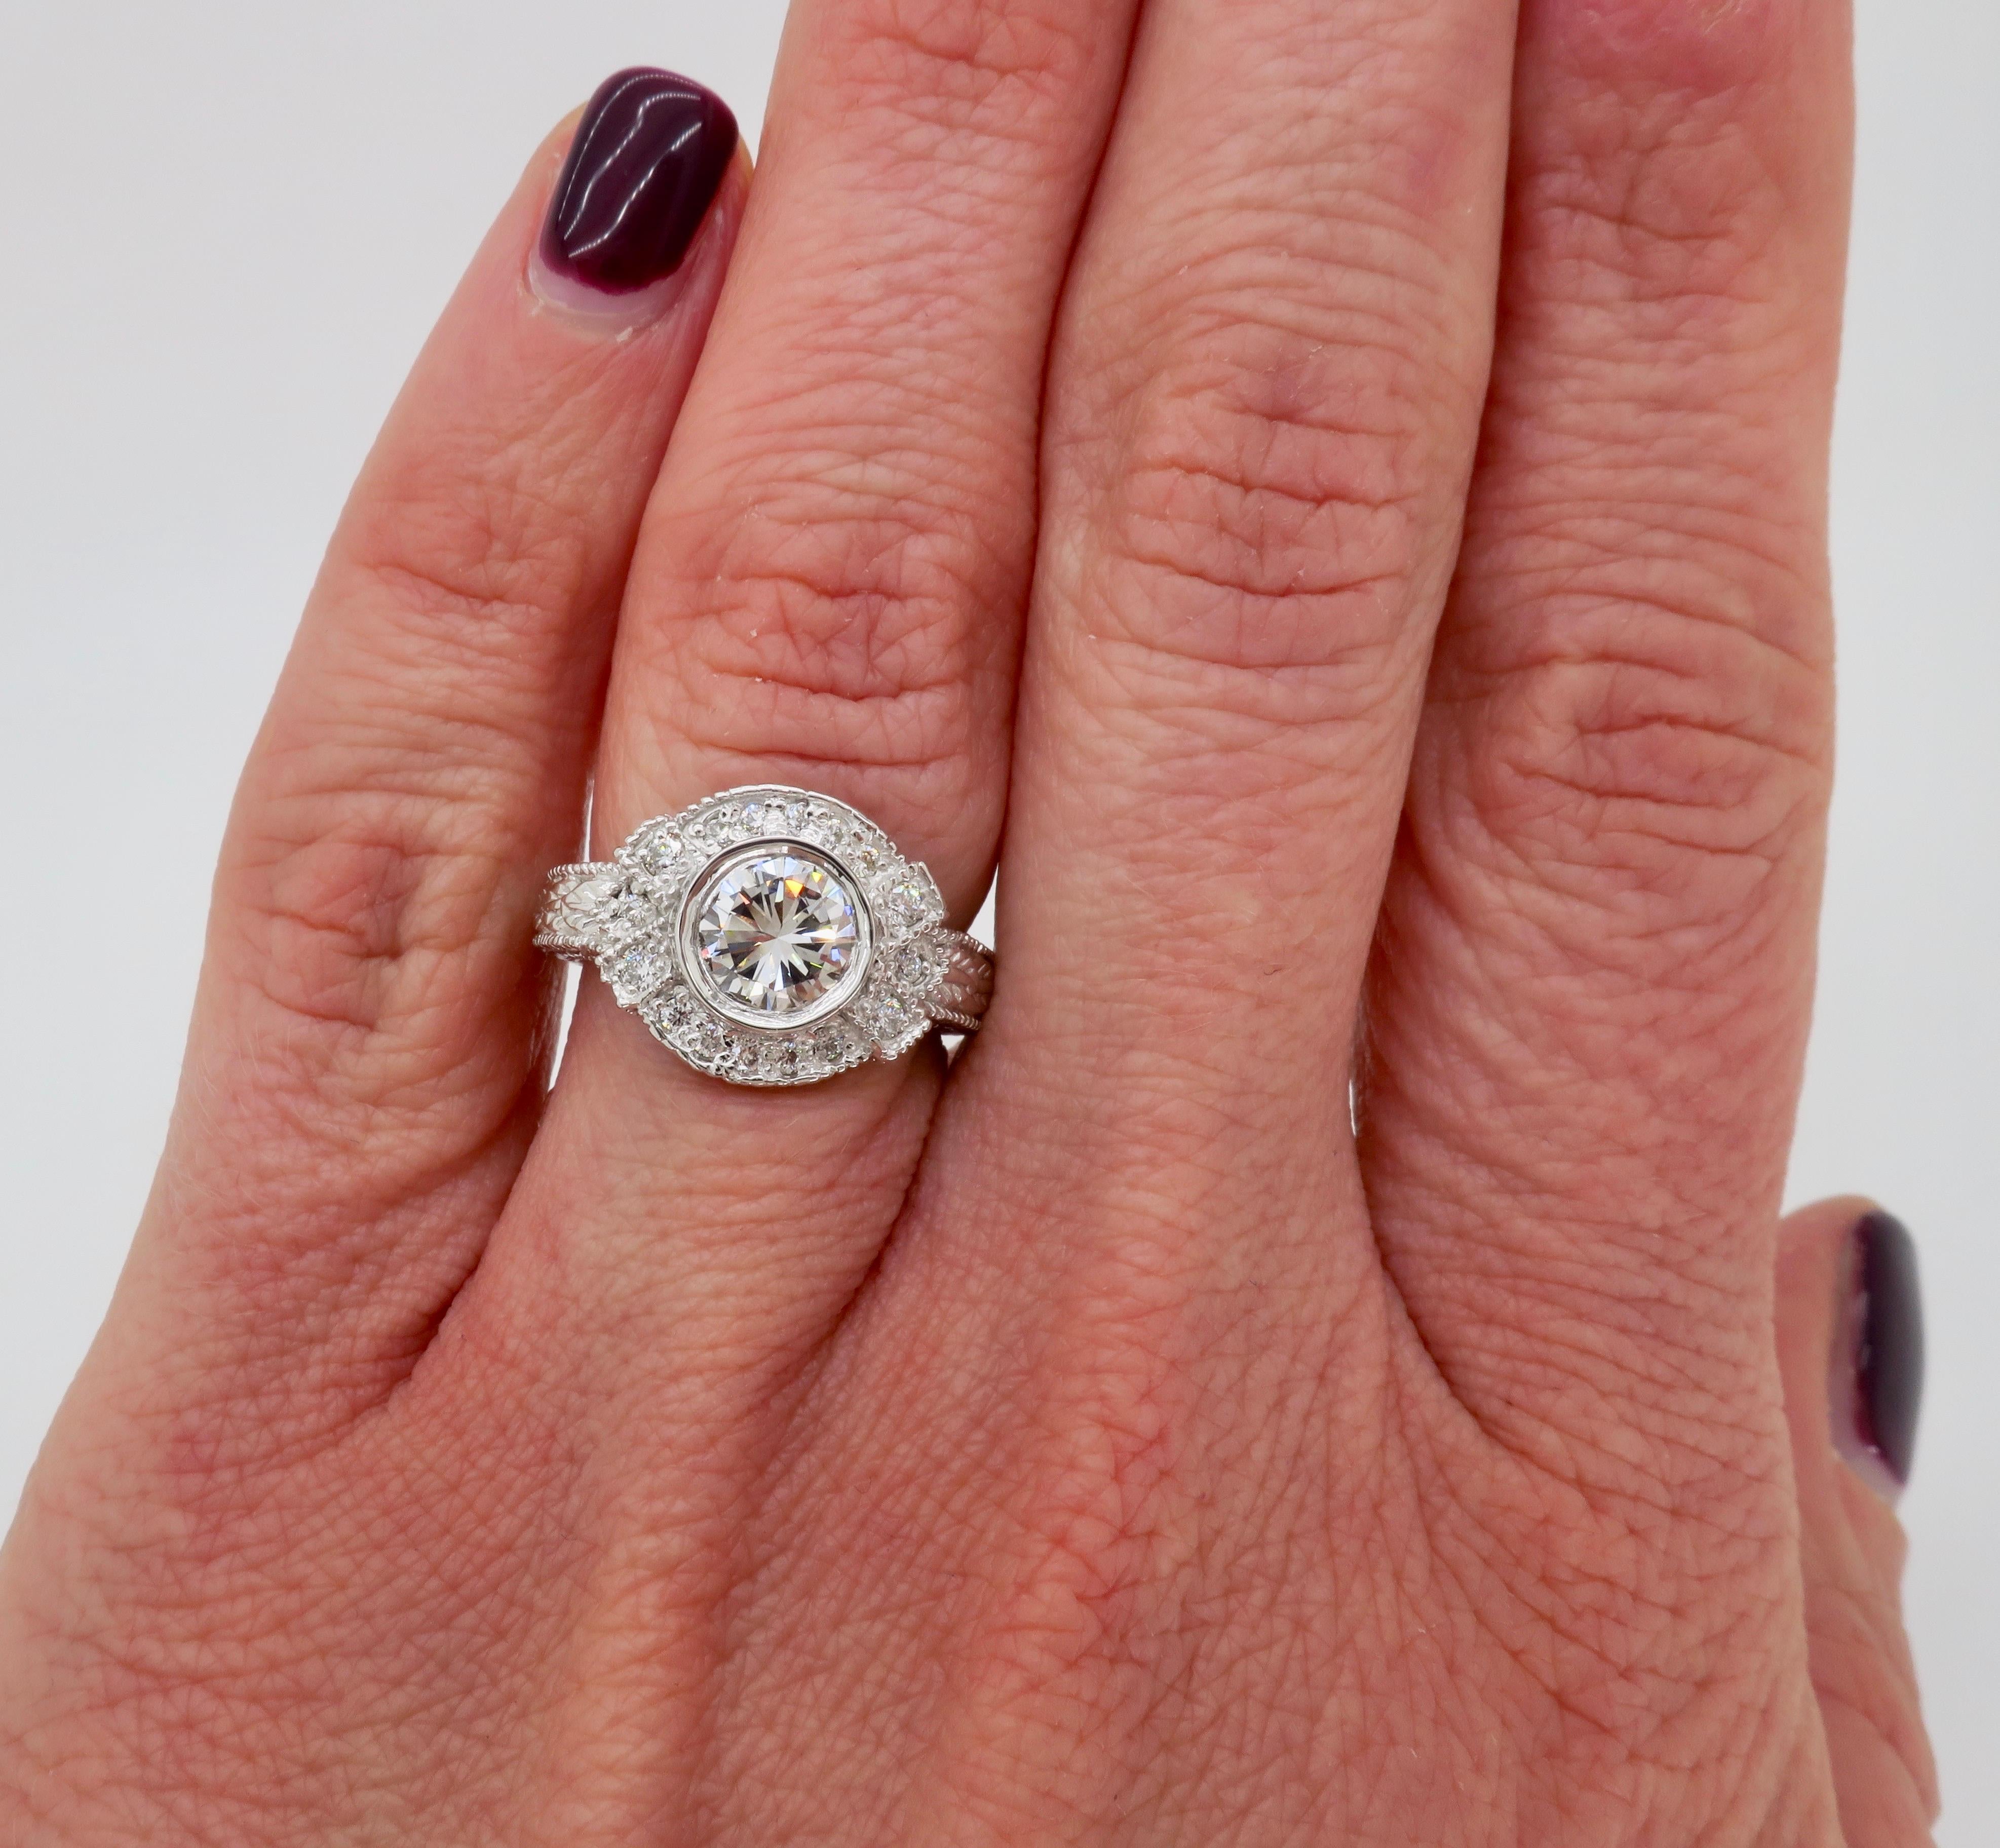 Vintage Inspired 1.27 Carat Diamond Ring Made in 14 Karat White Gold For Sale 4